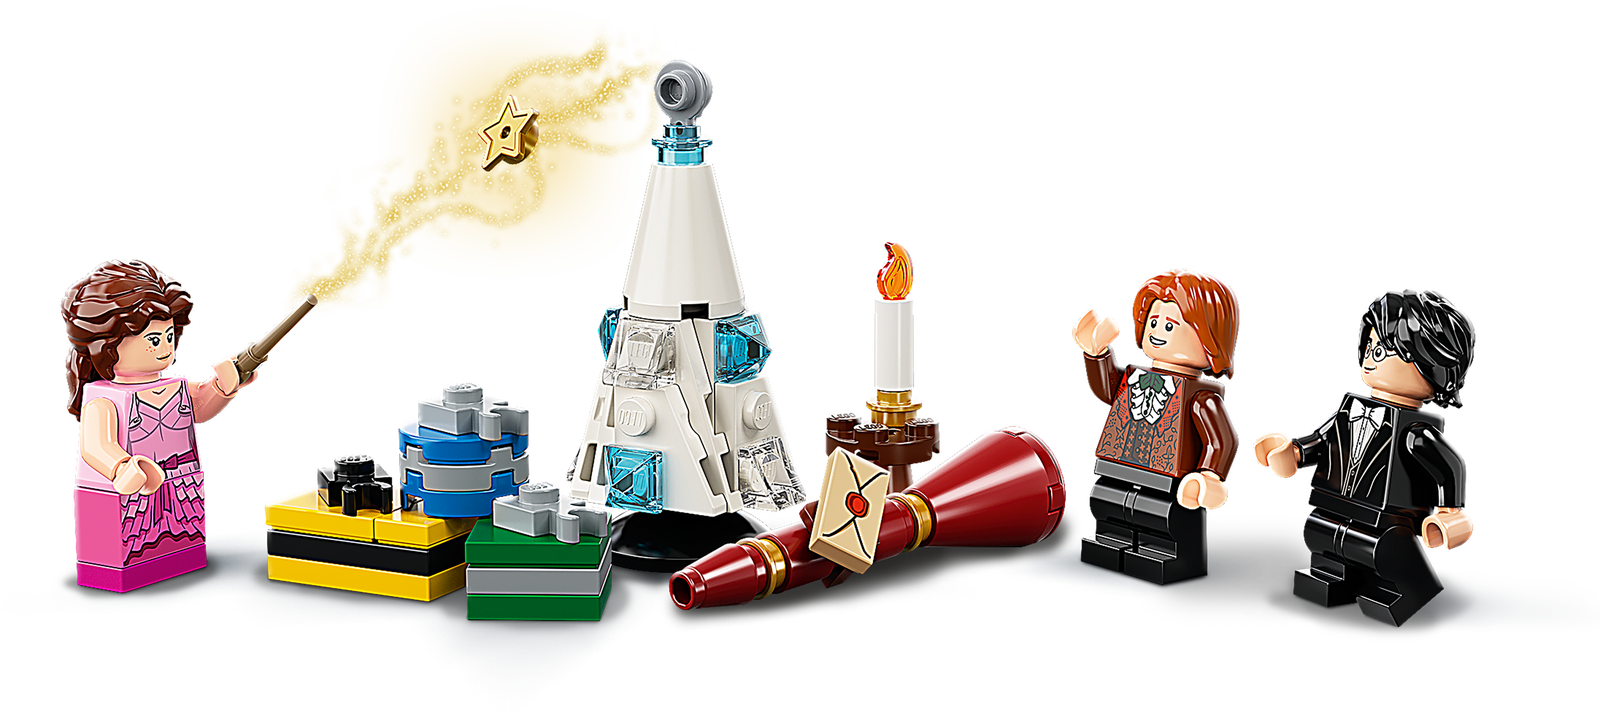 LEGO Harry Potter Advent Calendar 2020 75981